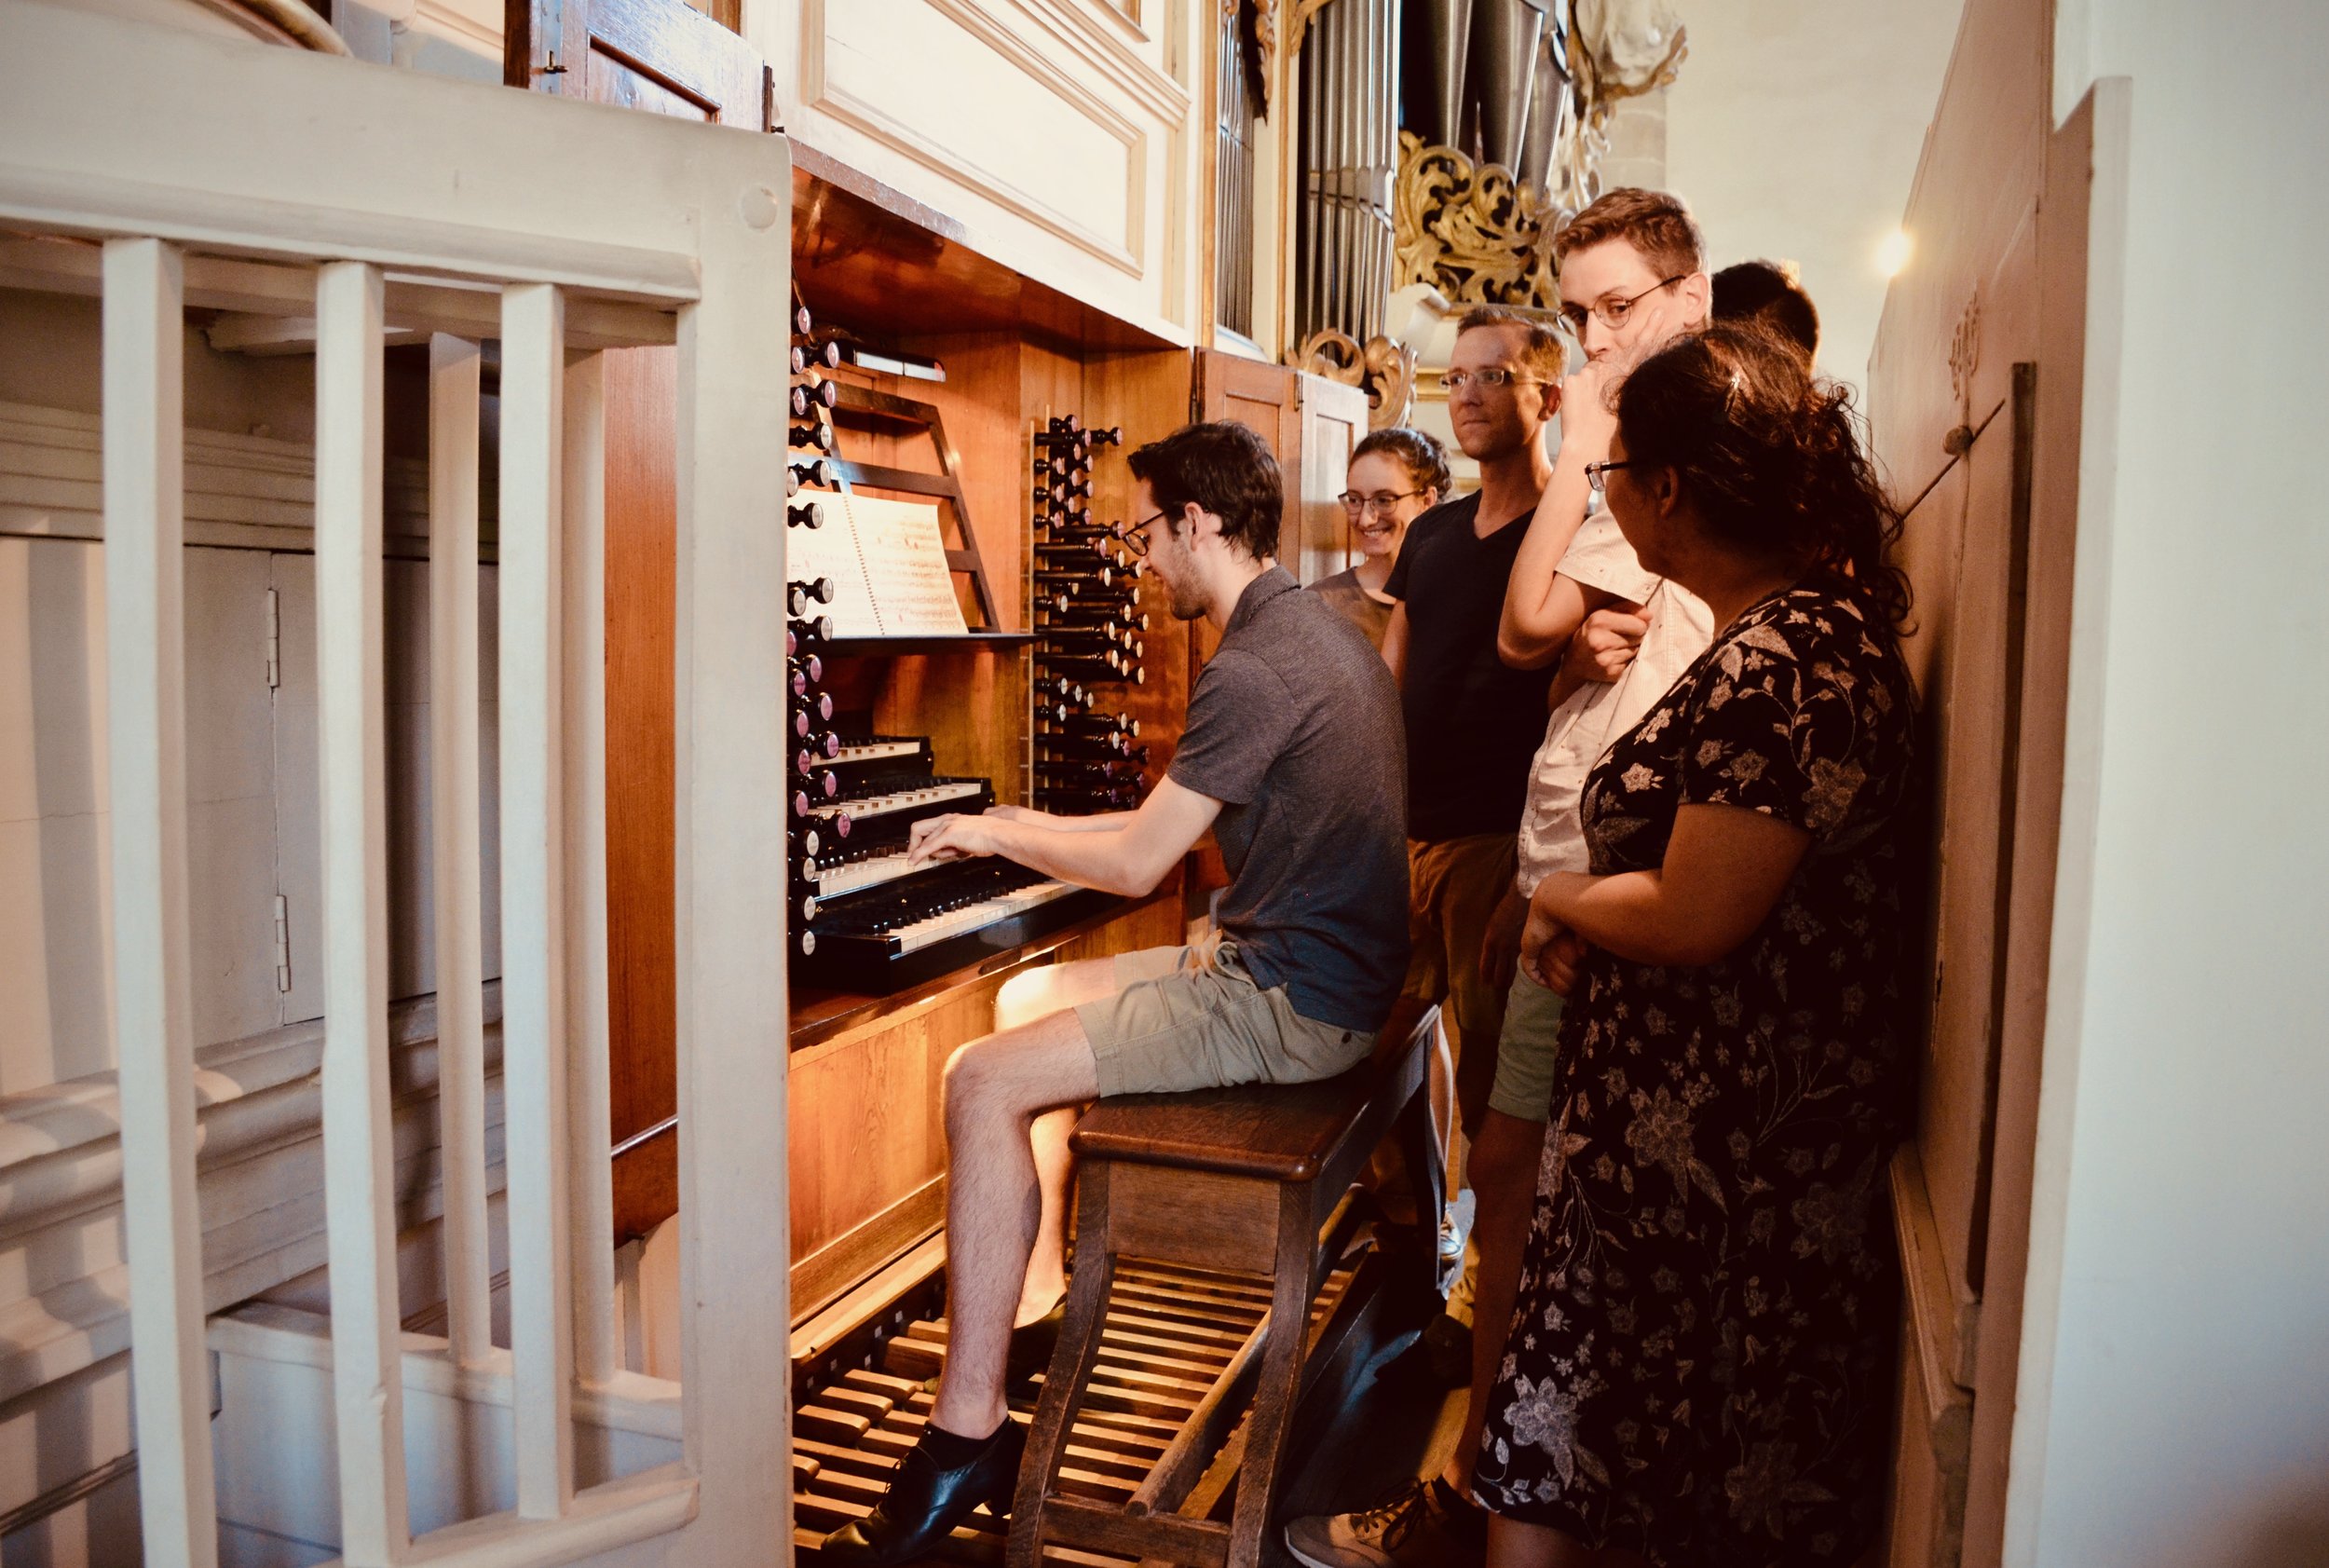  Nick Capozzoli plays the 1855 Ladegast Organ, Merseburg Dom. 